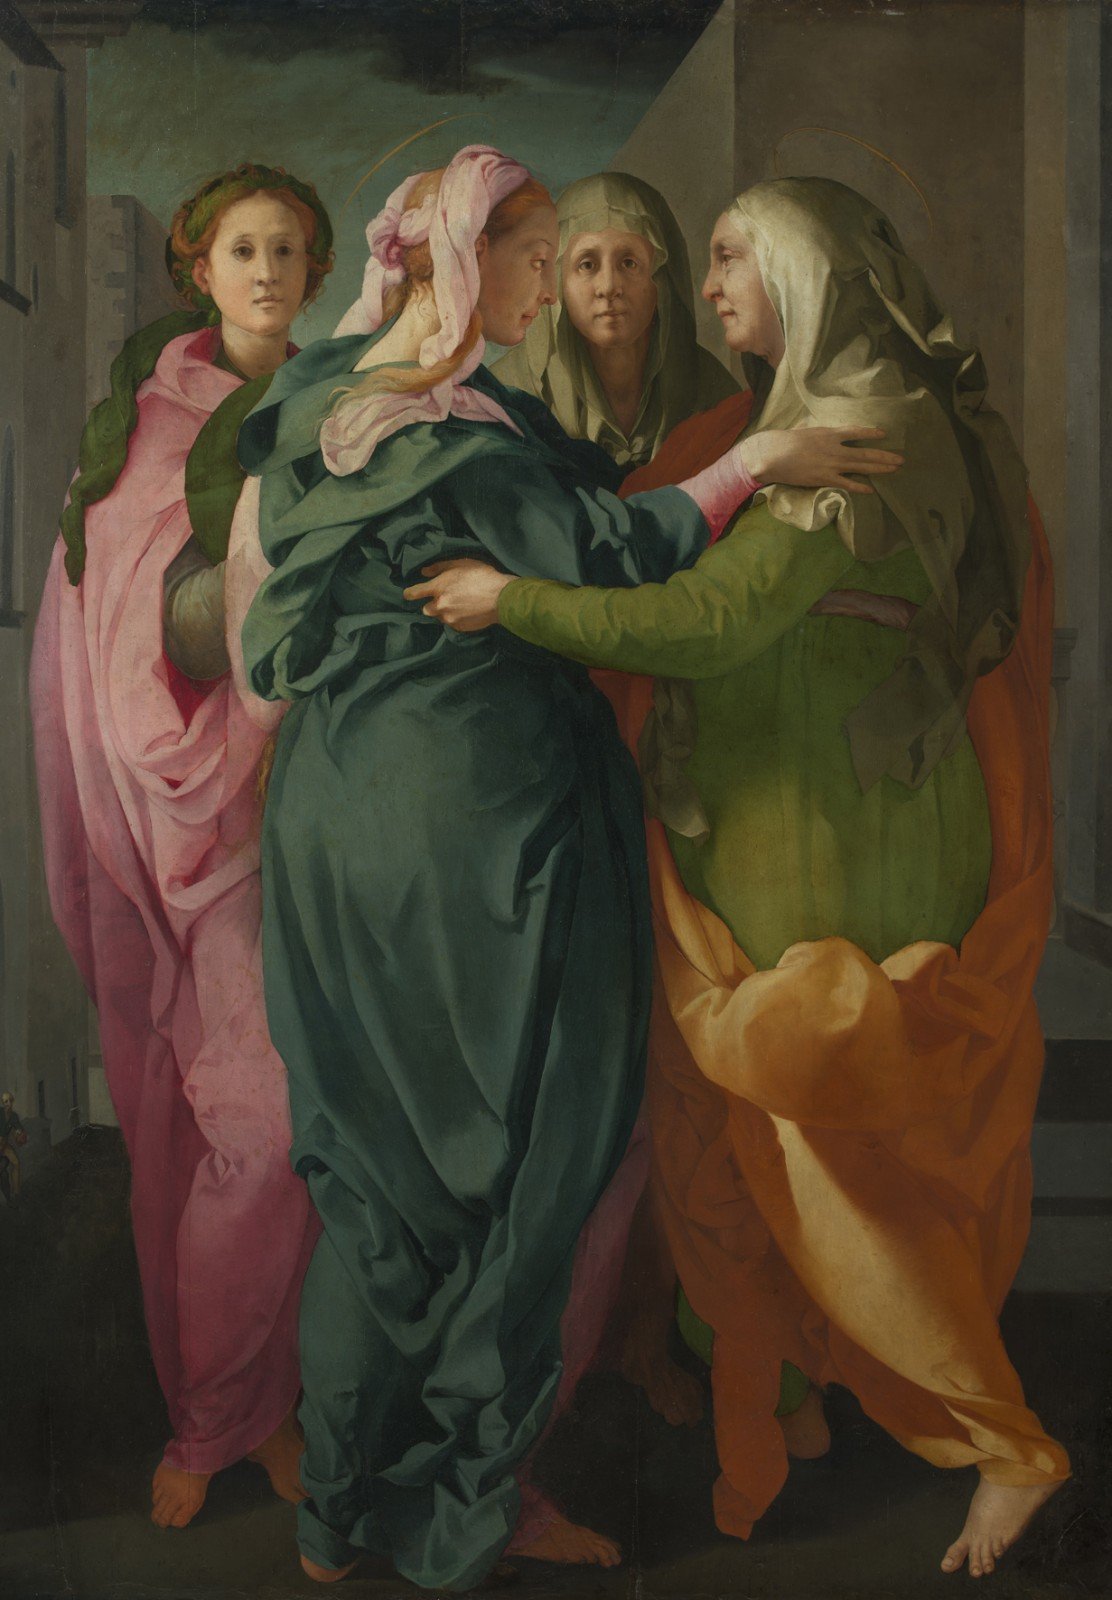 Pontormo (Jacopo Carucci; Pontorme, Empoli 1494 - Florence 1557), "The Visitation", about 1528-1529, oil on canvas, 202 x 156 cm. Carmignano, Parish of St. Michael the Archangel.